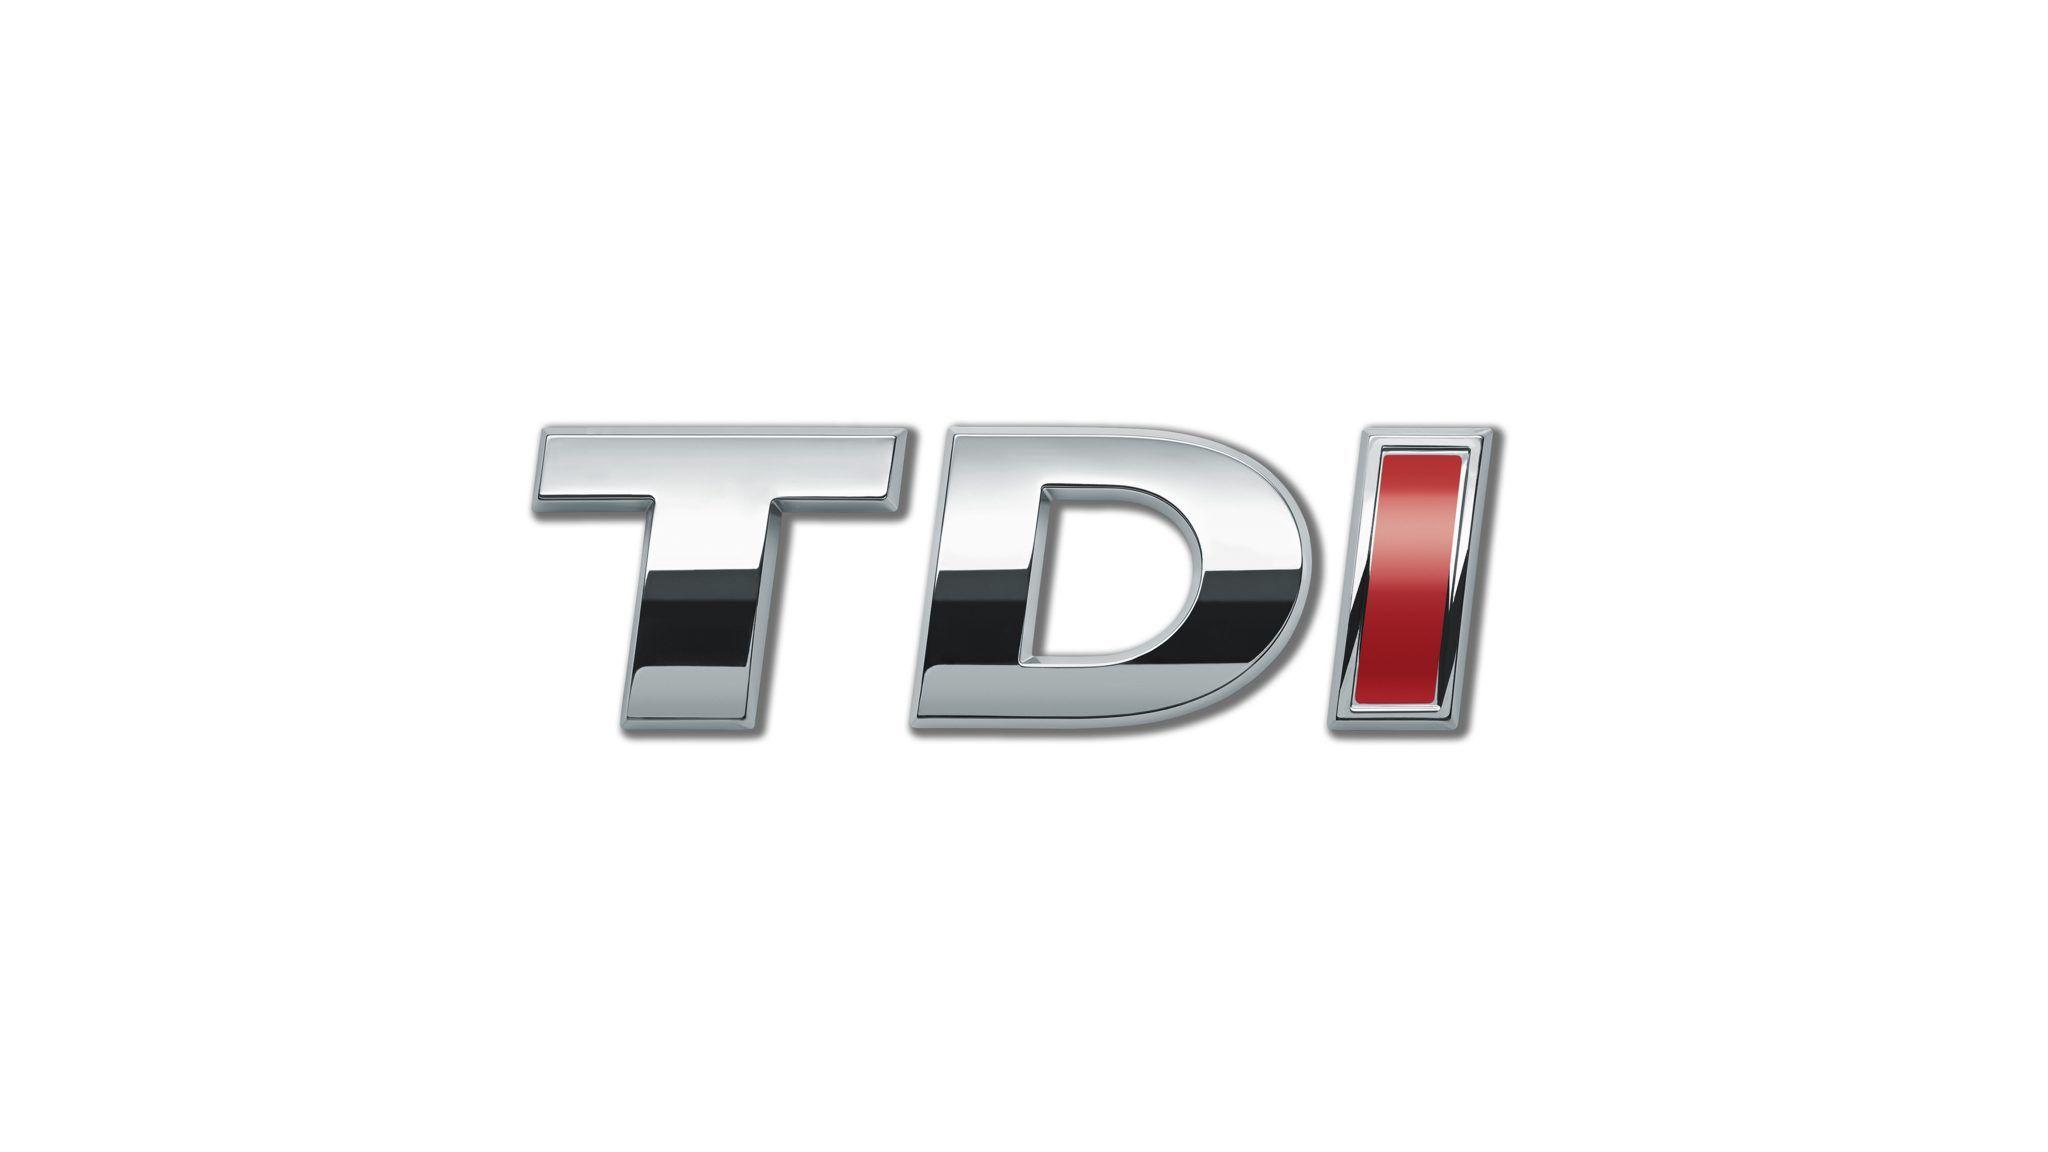 VW TDI Logo - VW Transporter Sportline | VW Vans